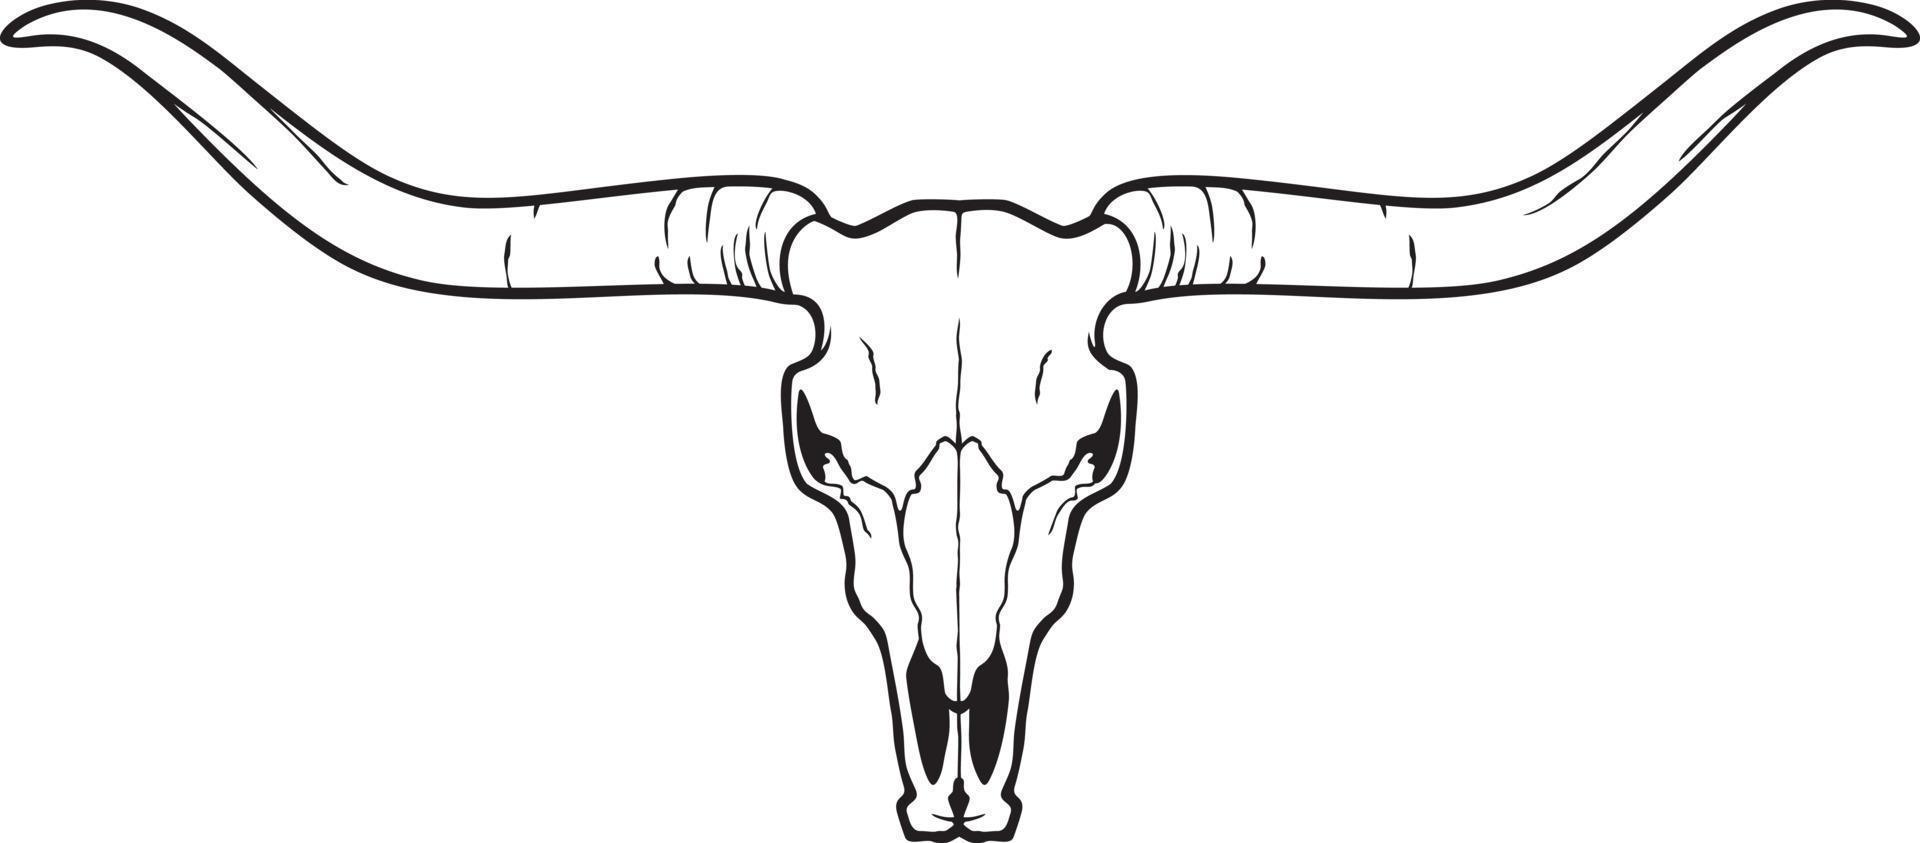 Longhorn-Kopfschädel - Stier- oder Kuhsymbol. Vektor-Illustration. vektor